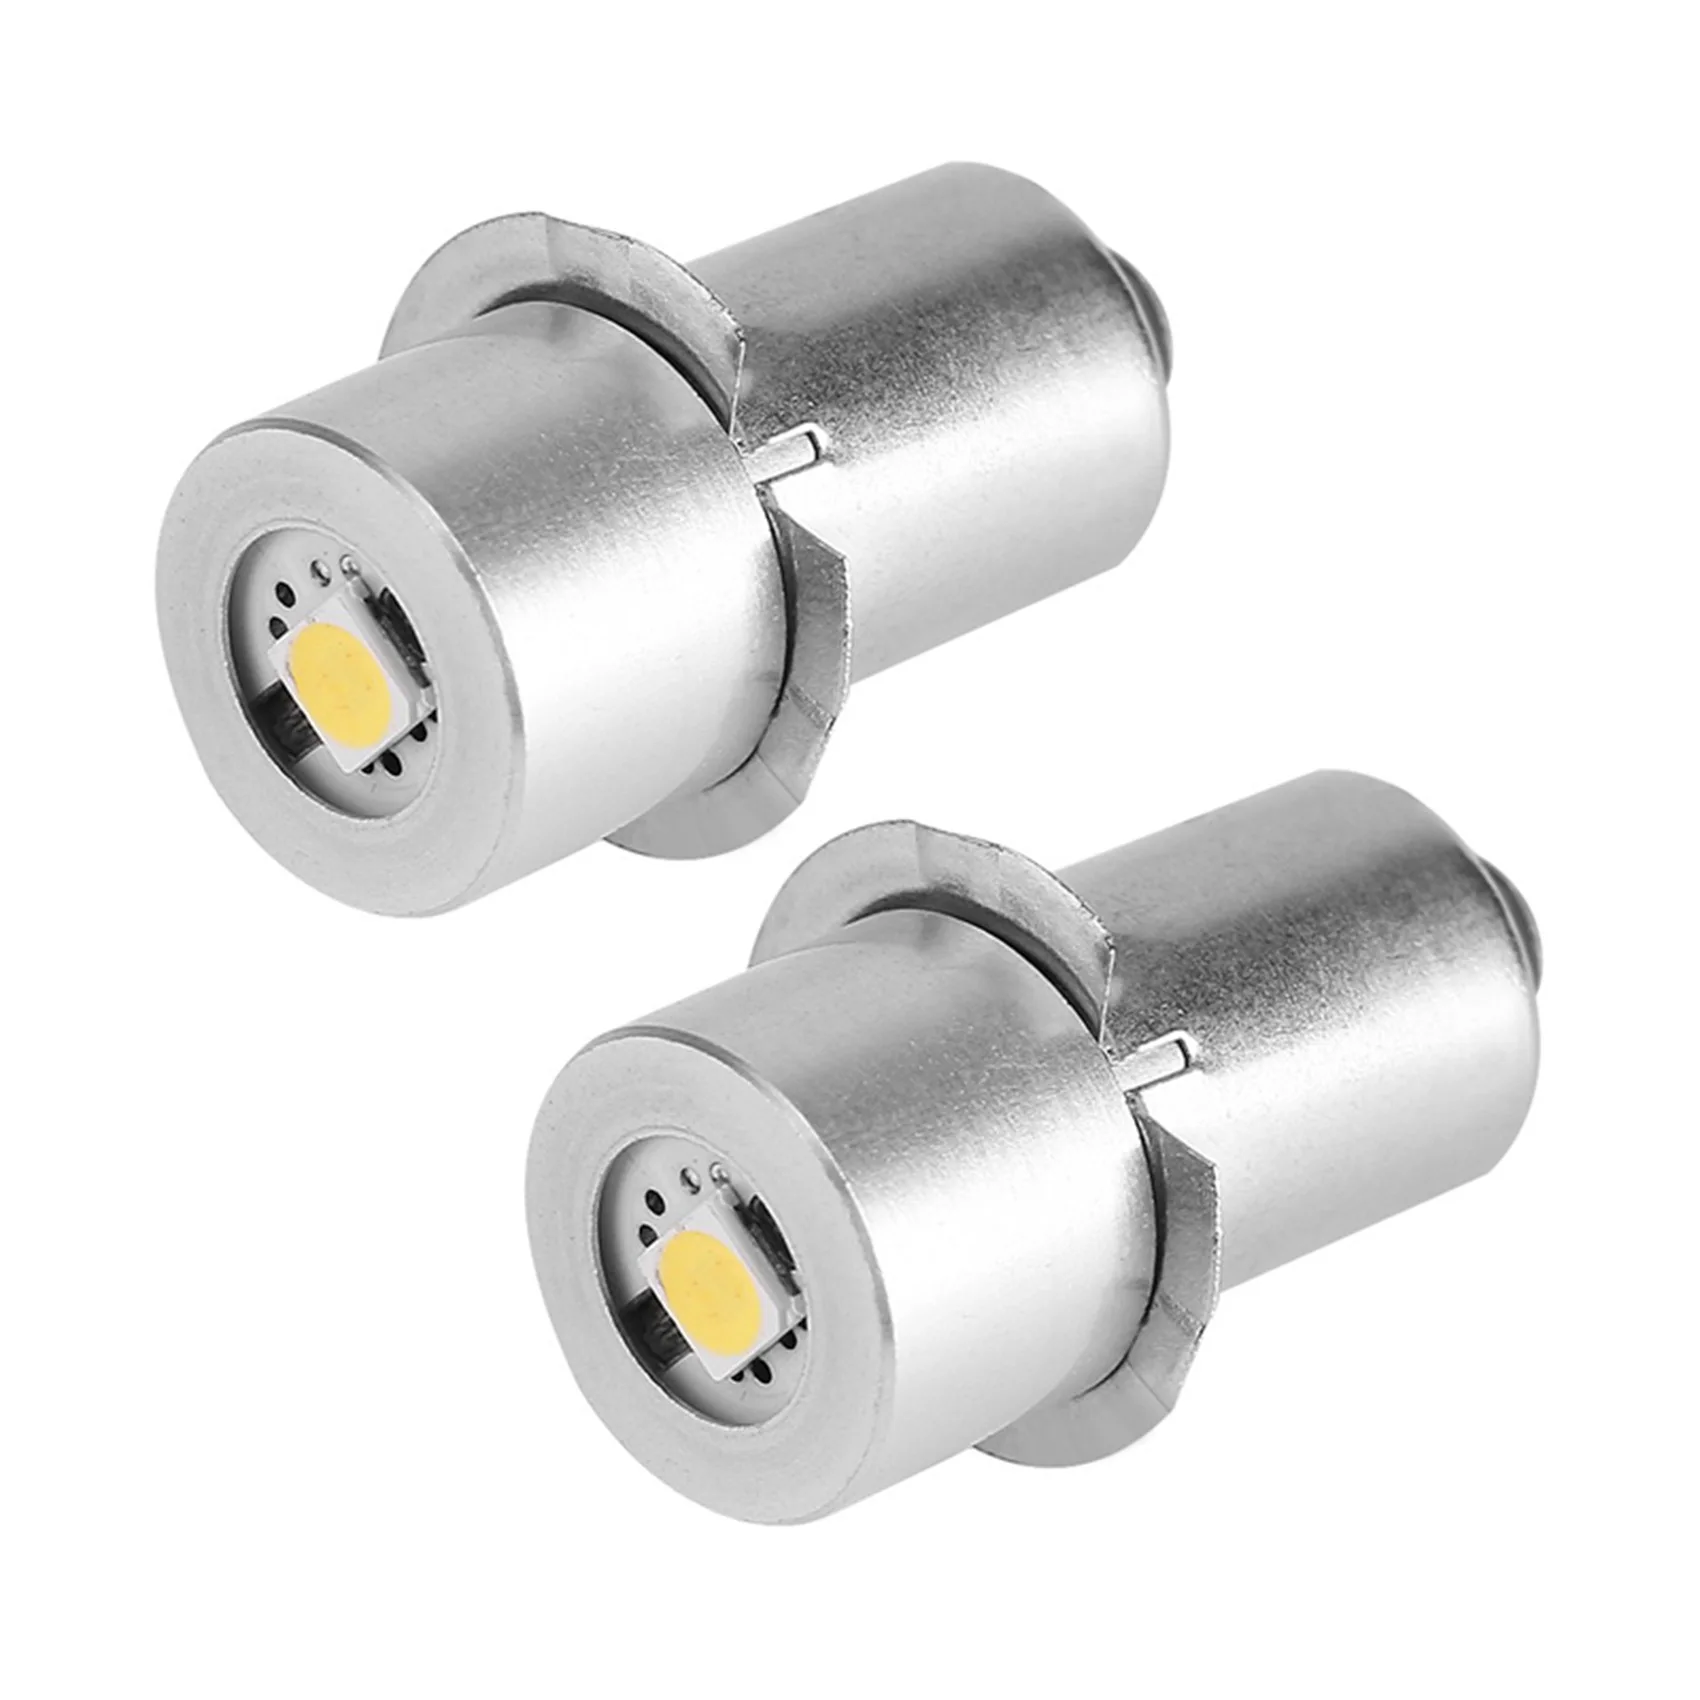 

2X 1W P13.5S LED Flashlight Bulb 100-110LM 2700-7000K Replacement Bulb Torch Lamp Emergency Work Light(6V)